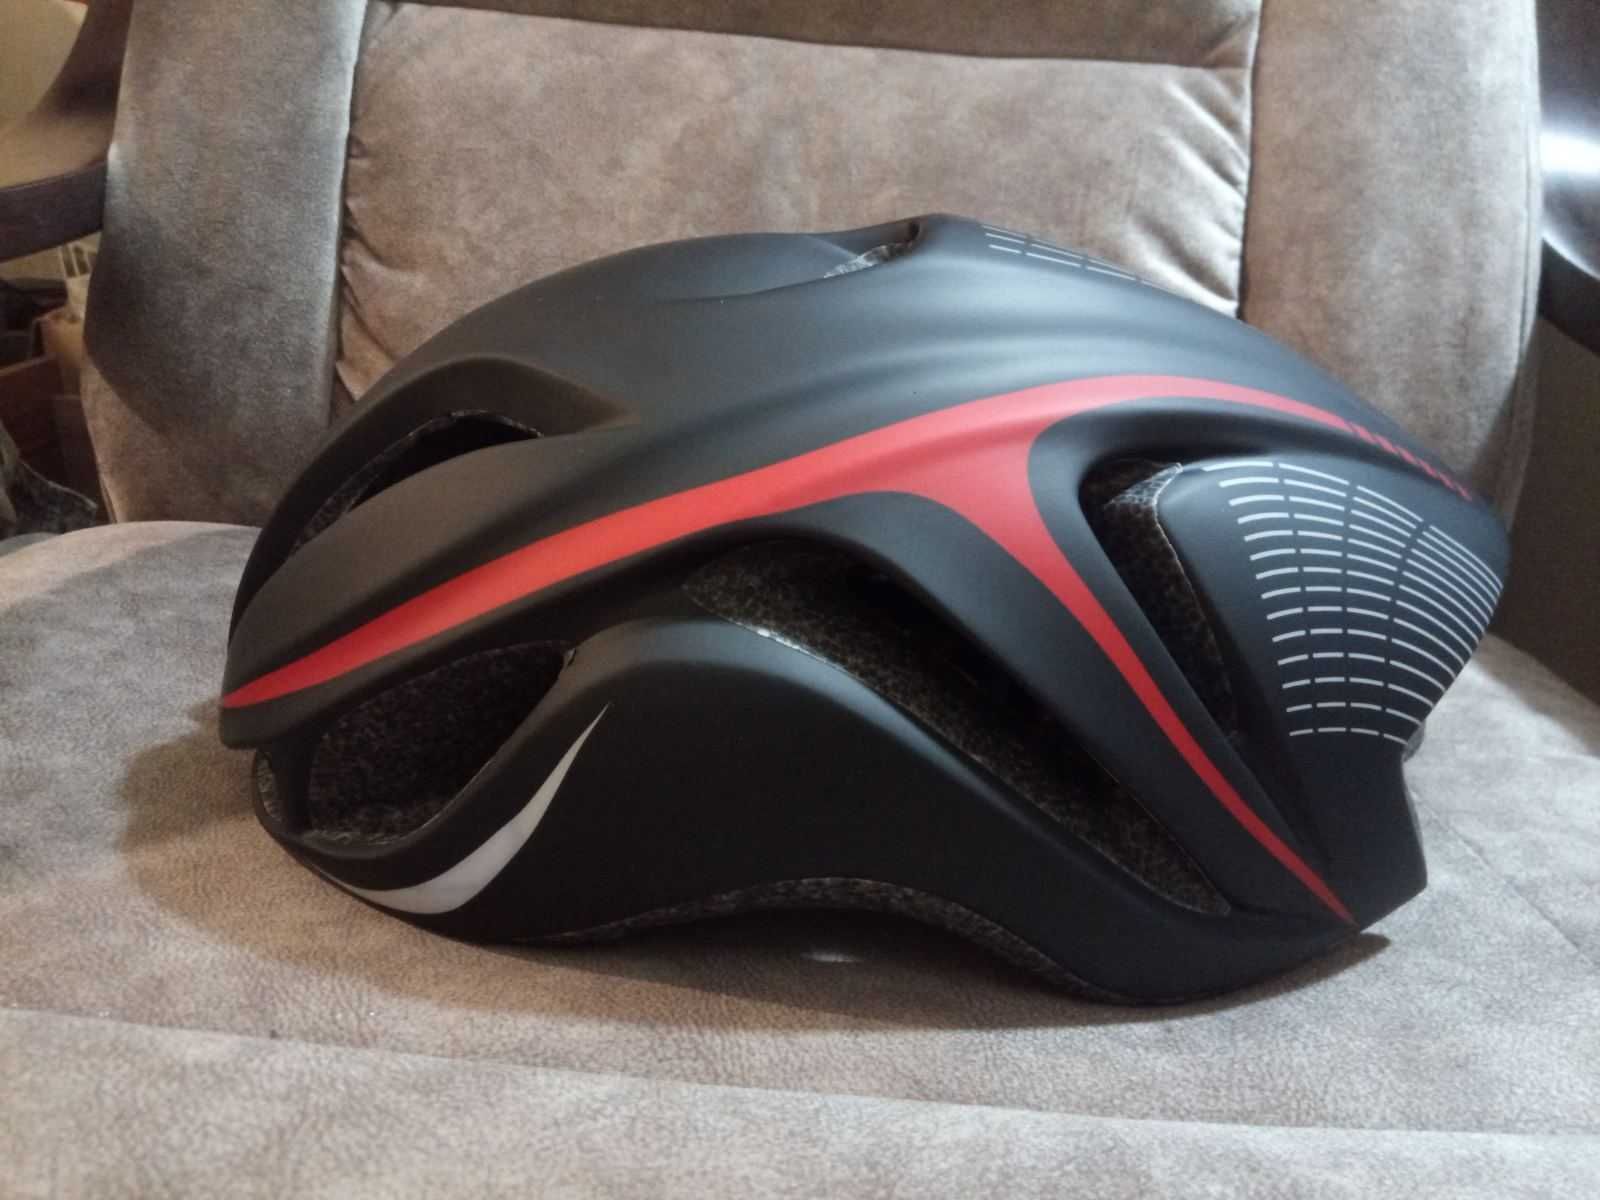 Велосипедний шолом (Велосипедный шлем) Eronbros XL чорний і білий